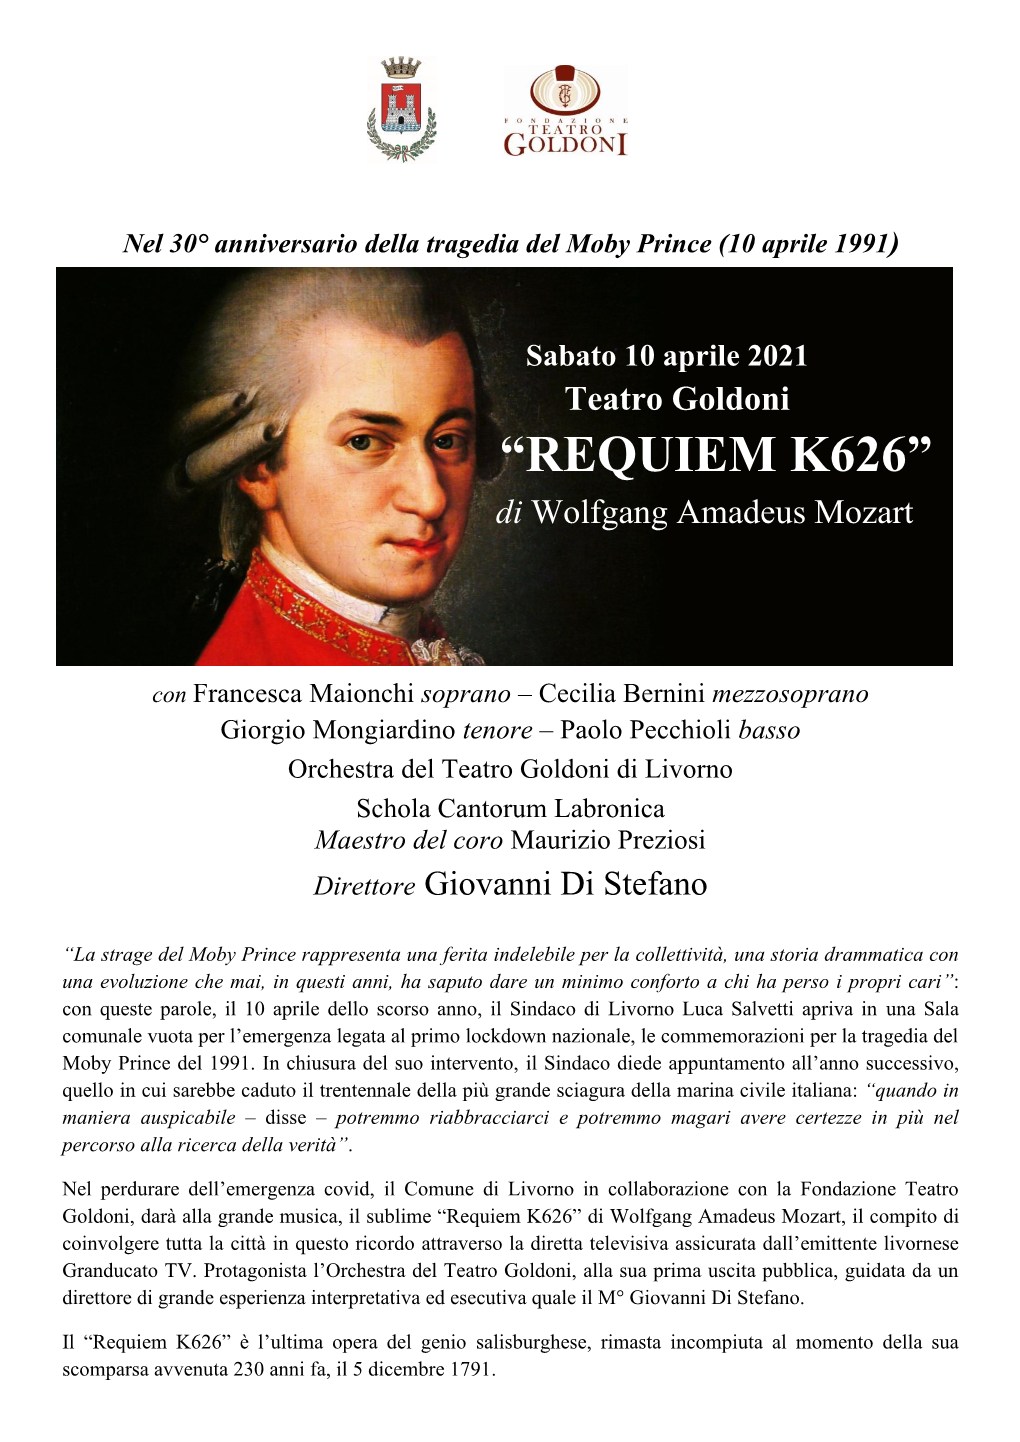 “REQUIEM K626” Di Wolfgang Amadeus Mozart